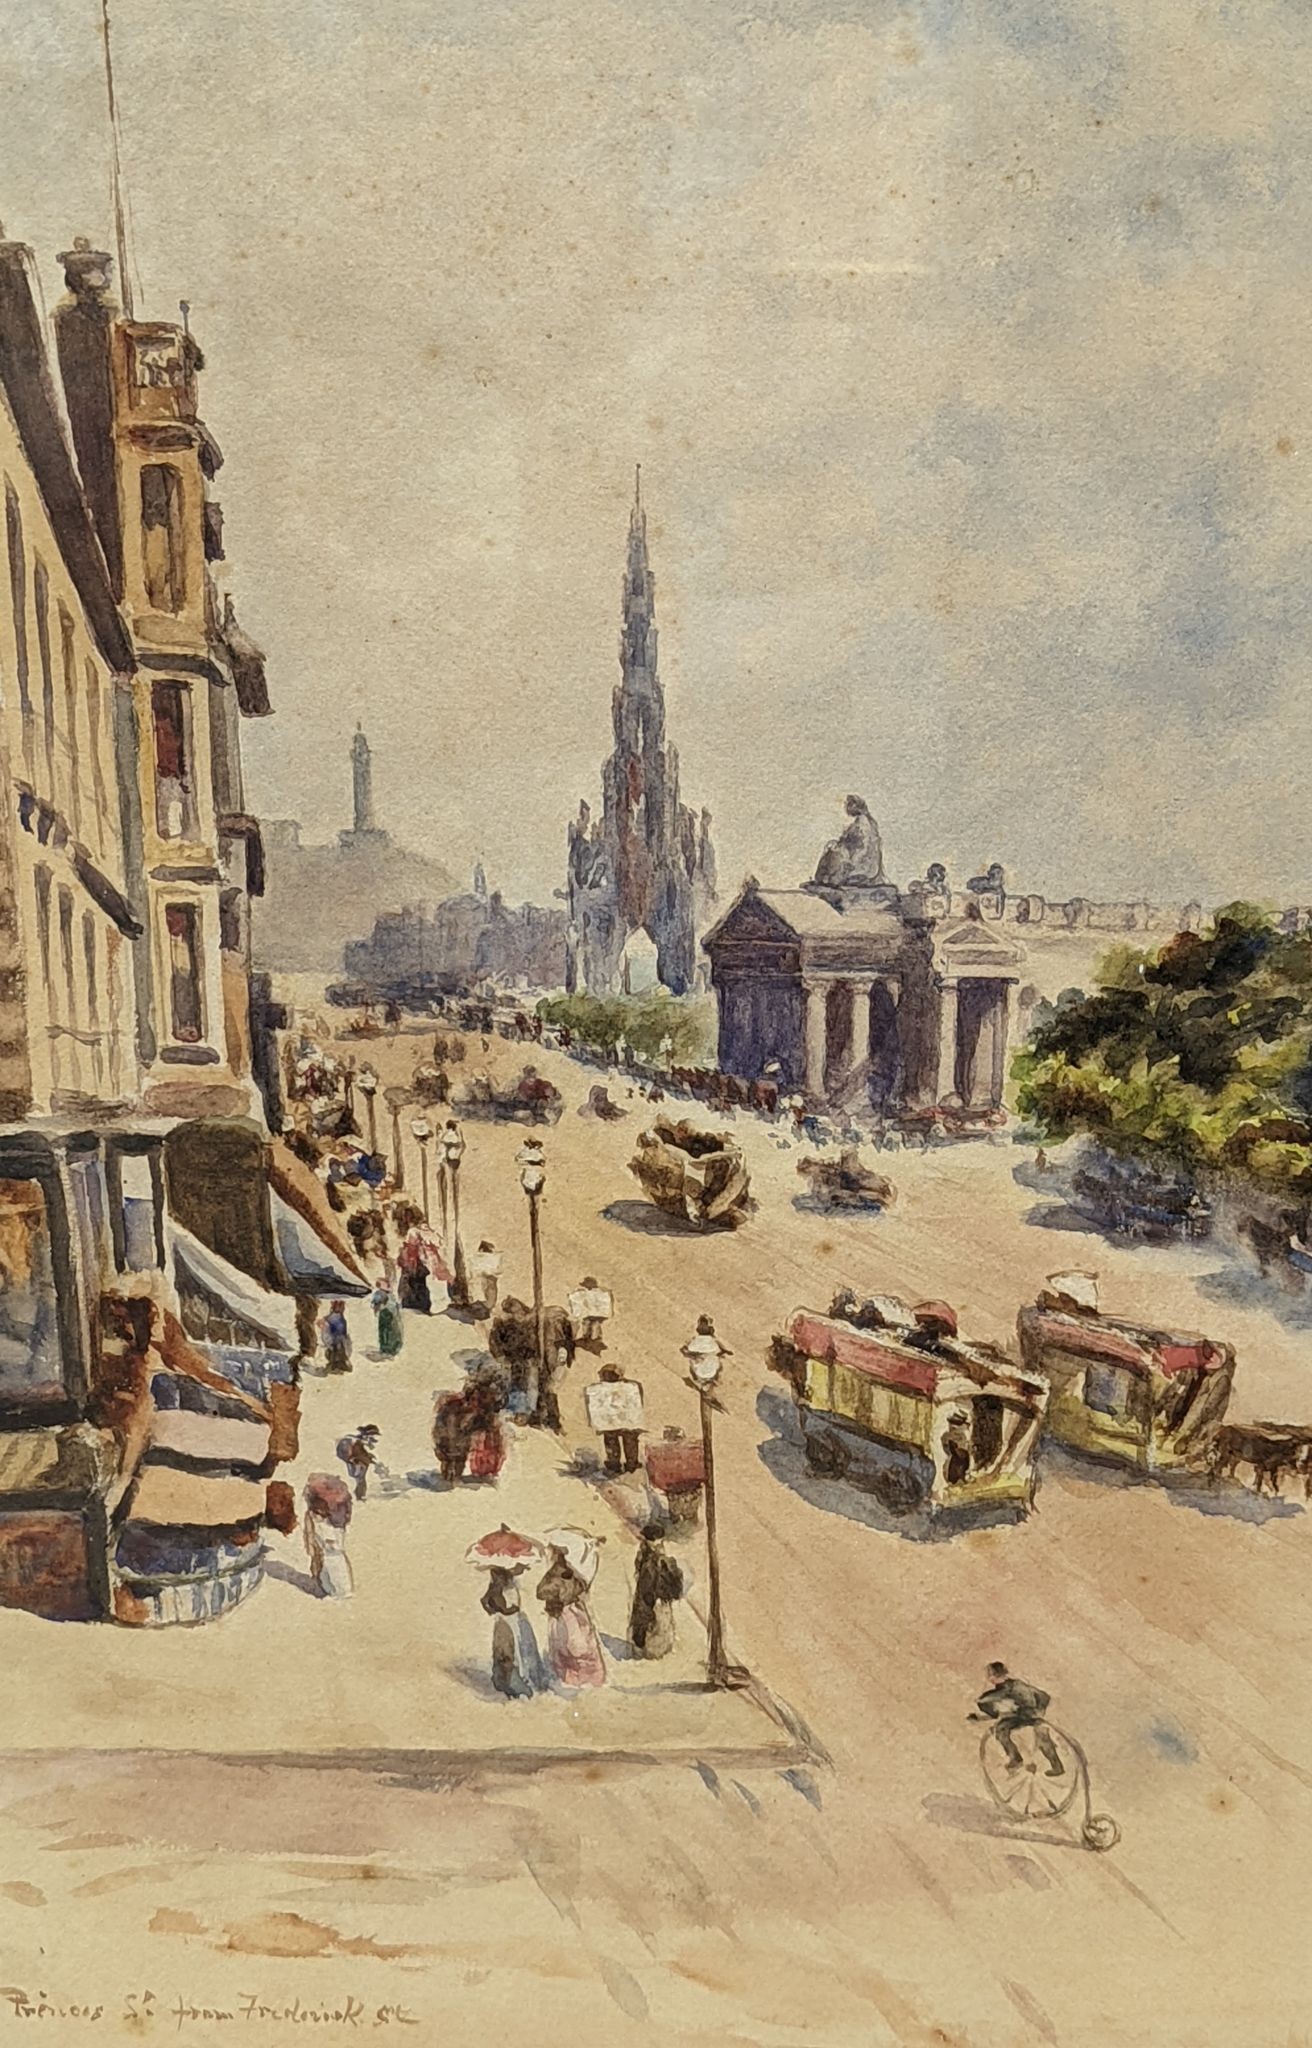 watercolour, Princes Street from Frederick Street, Edinburgh, 50 x 34cm